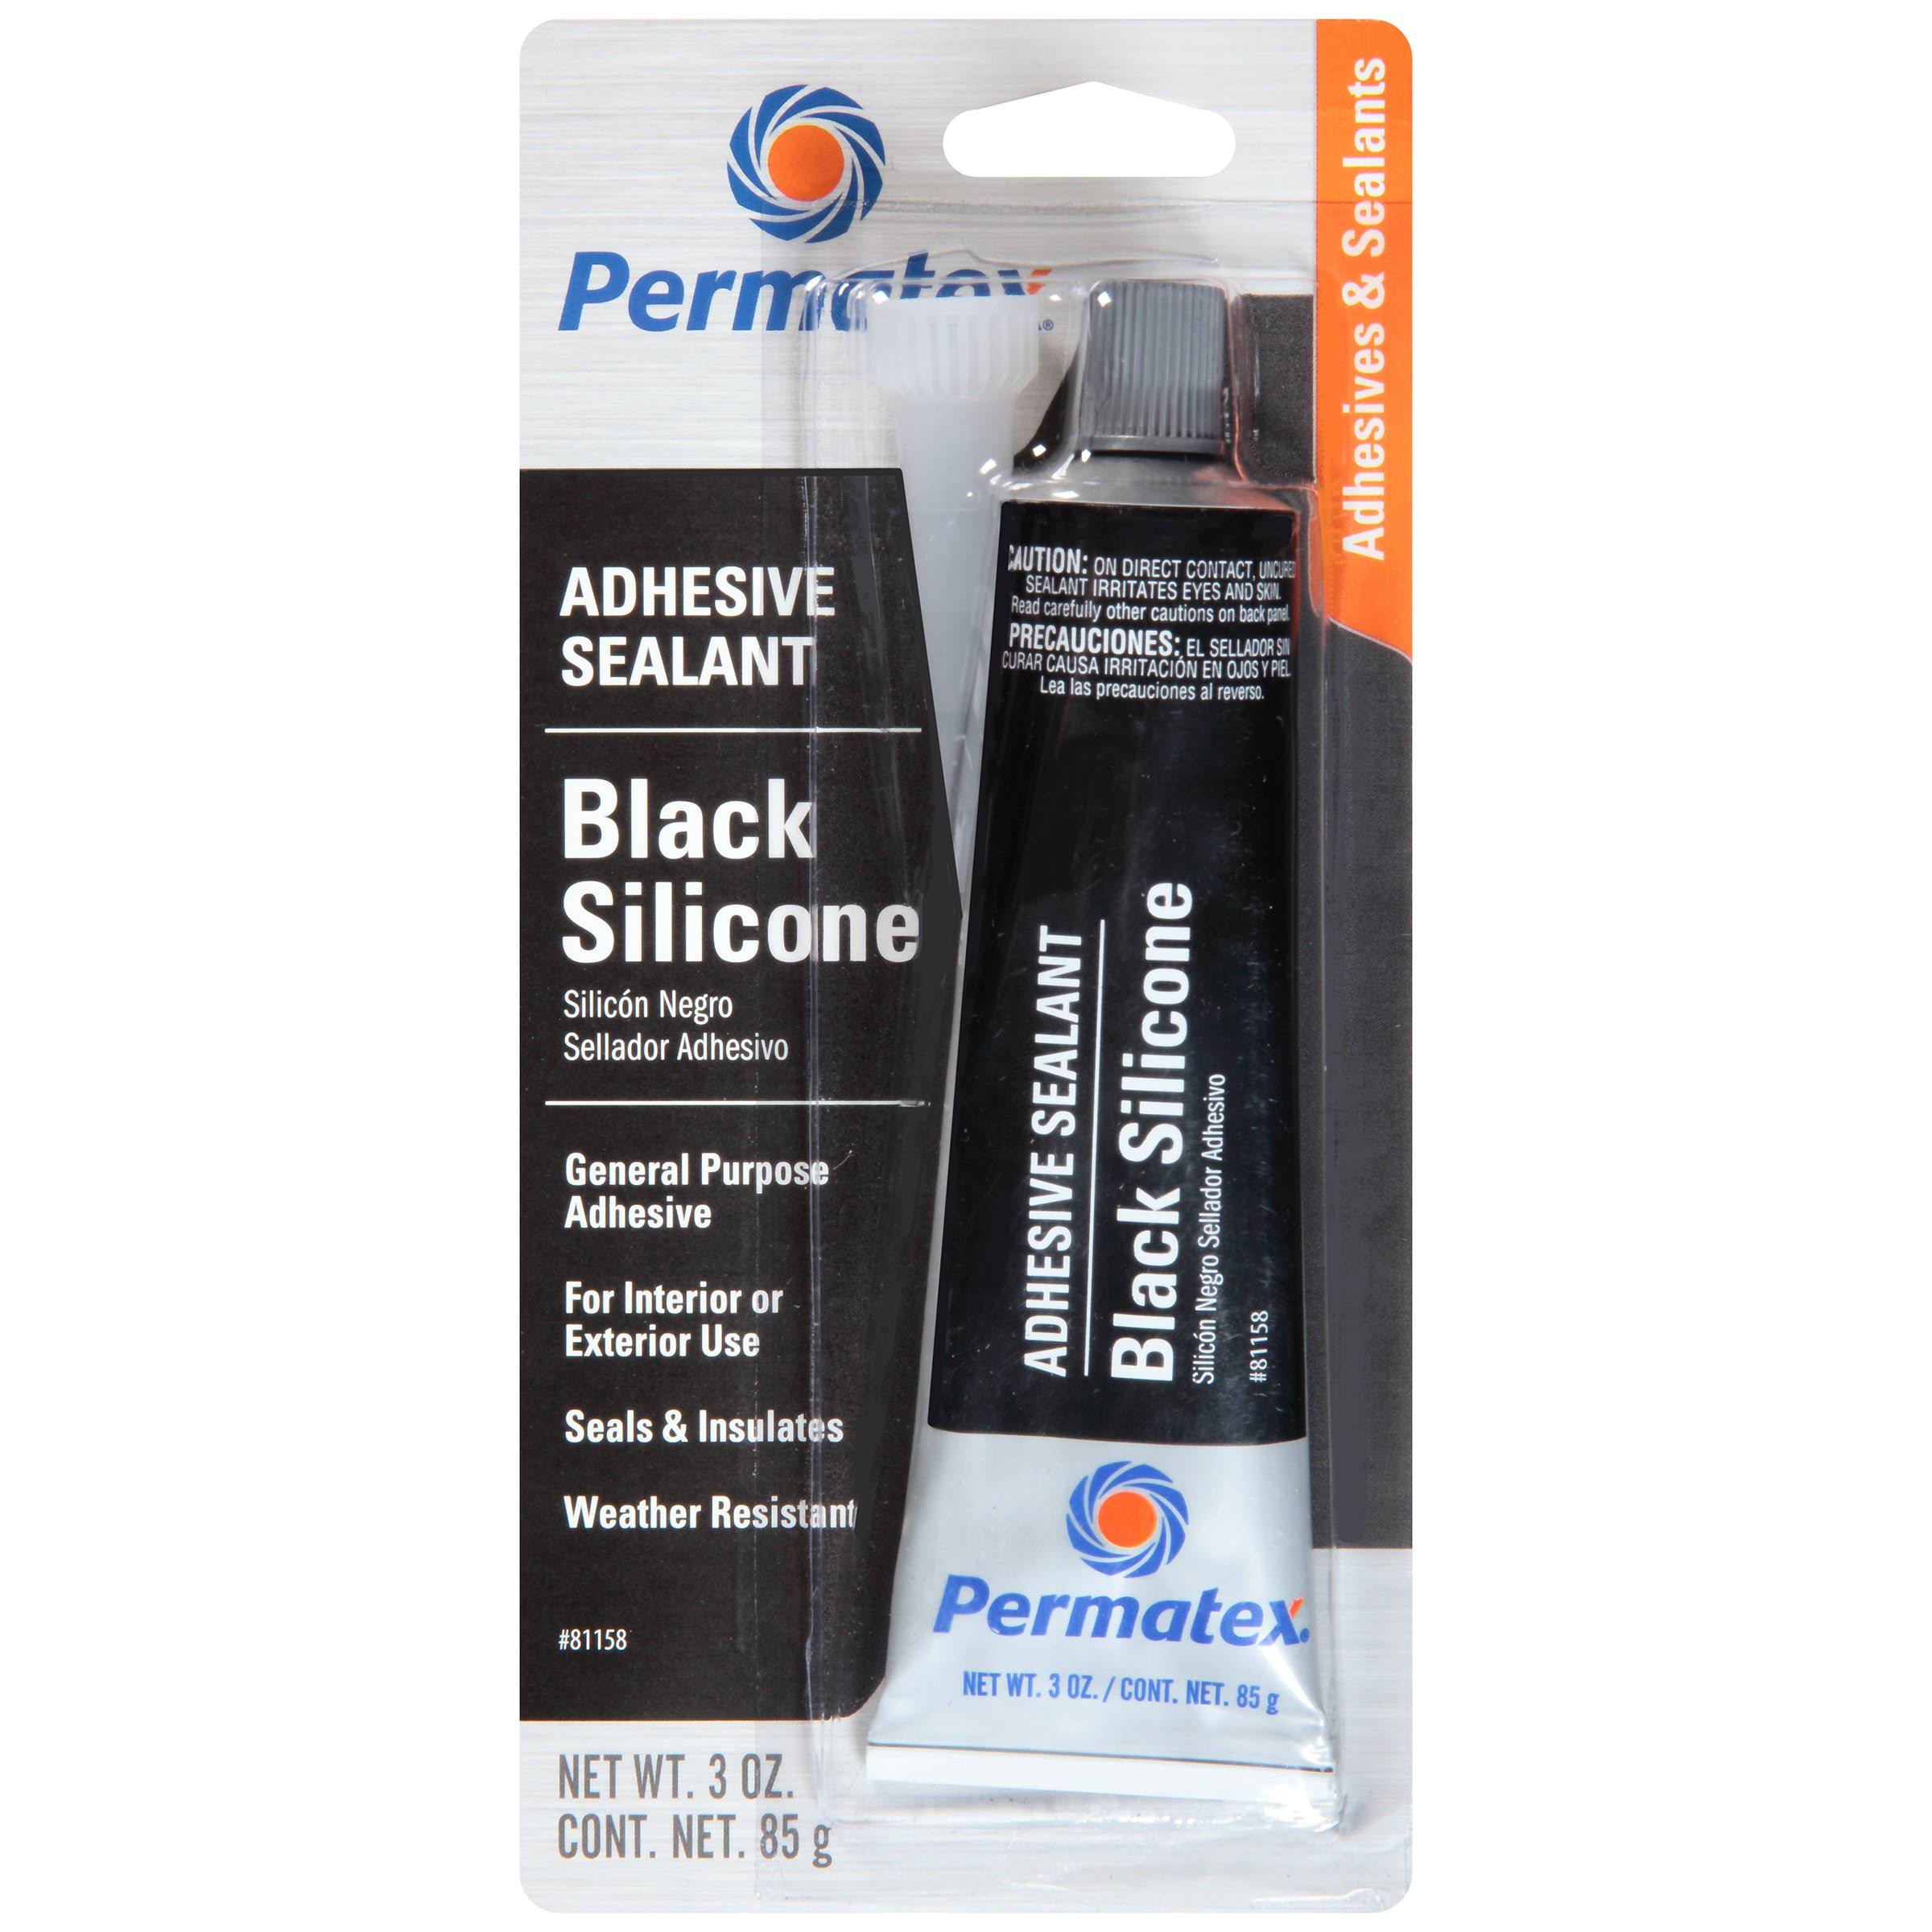 Permatex Silicone Adhesive Sealant - Black